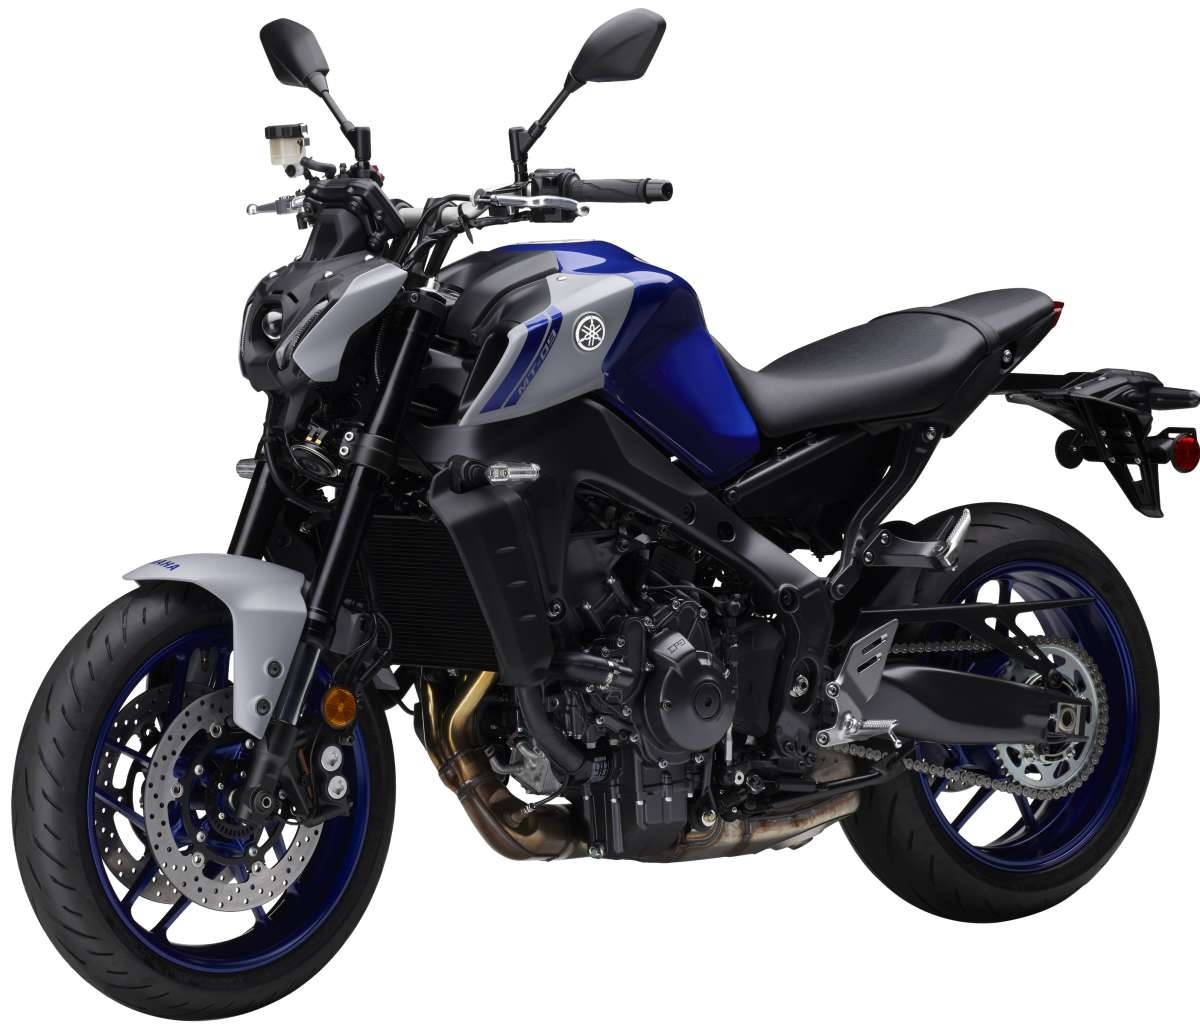 Yamaha ra mắt MT09 SP 2021  chiếc naked bike hiệu năng cao đầy cá tính